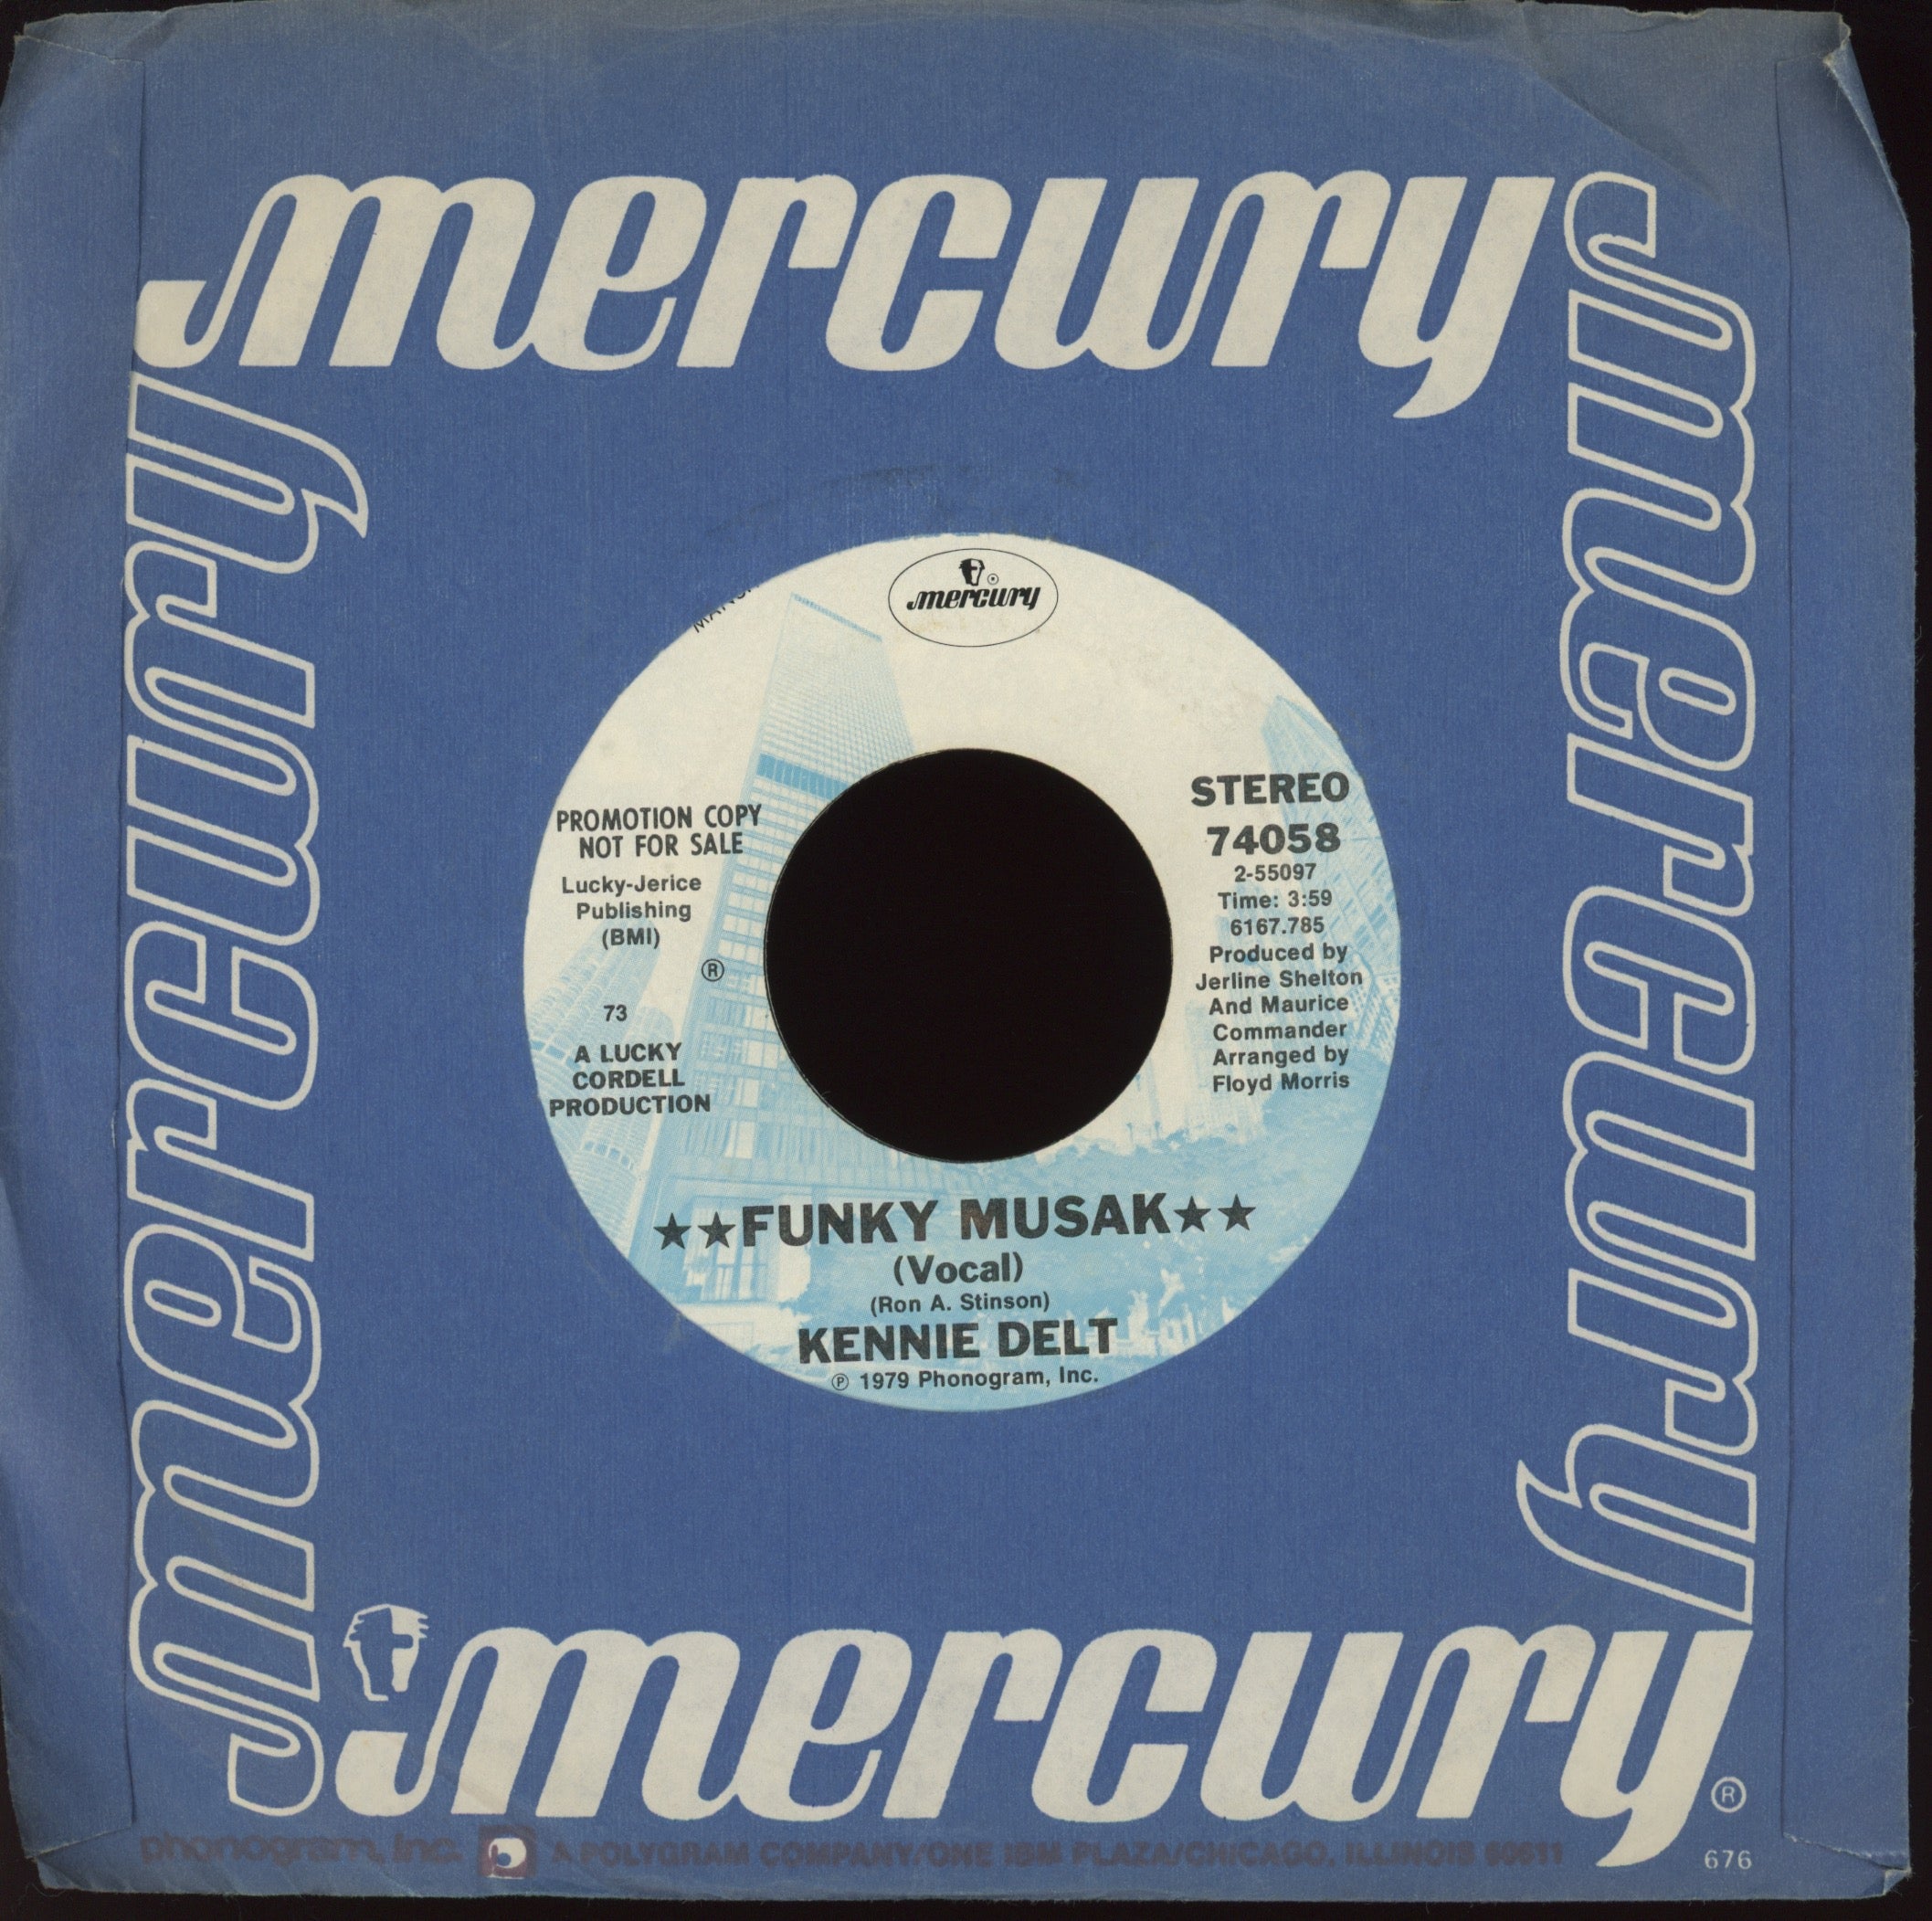 Kennie Delt - Funky Musak on Mercury Promo